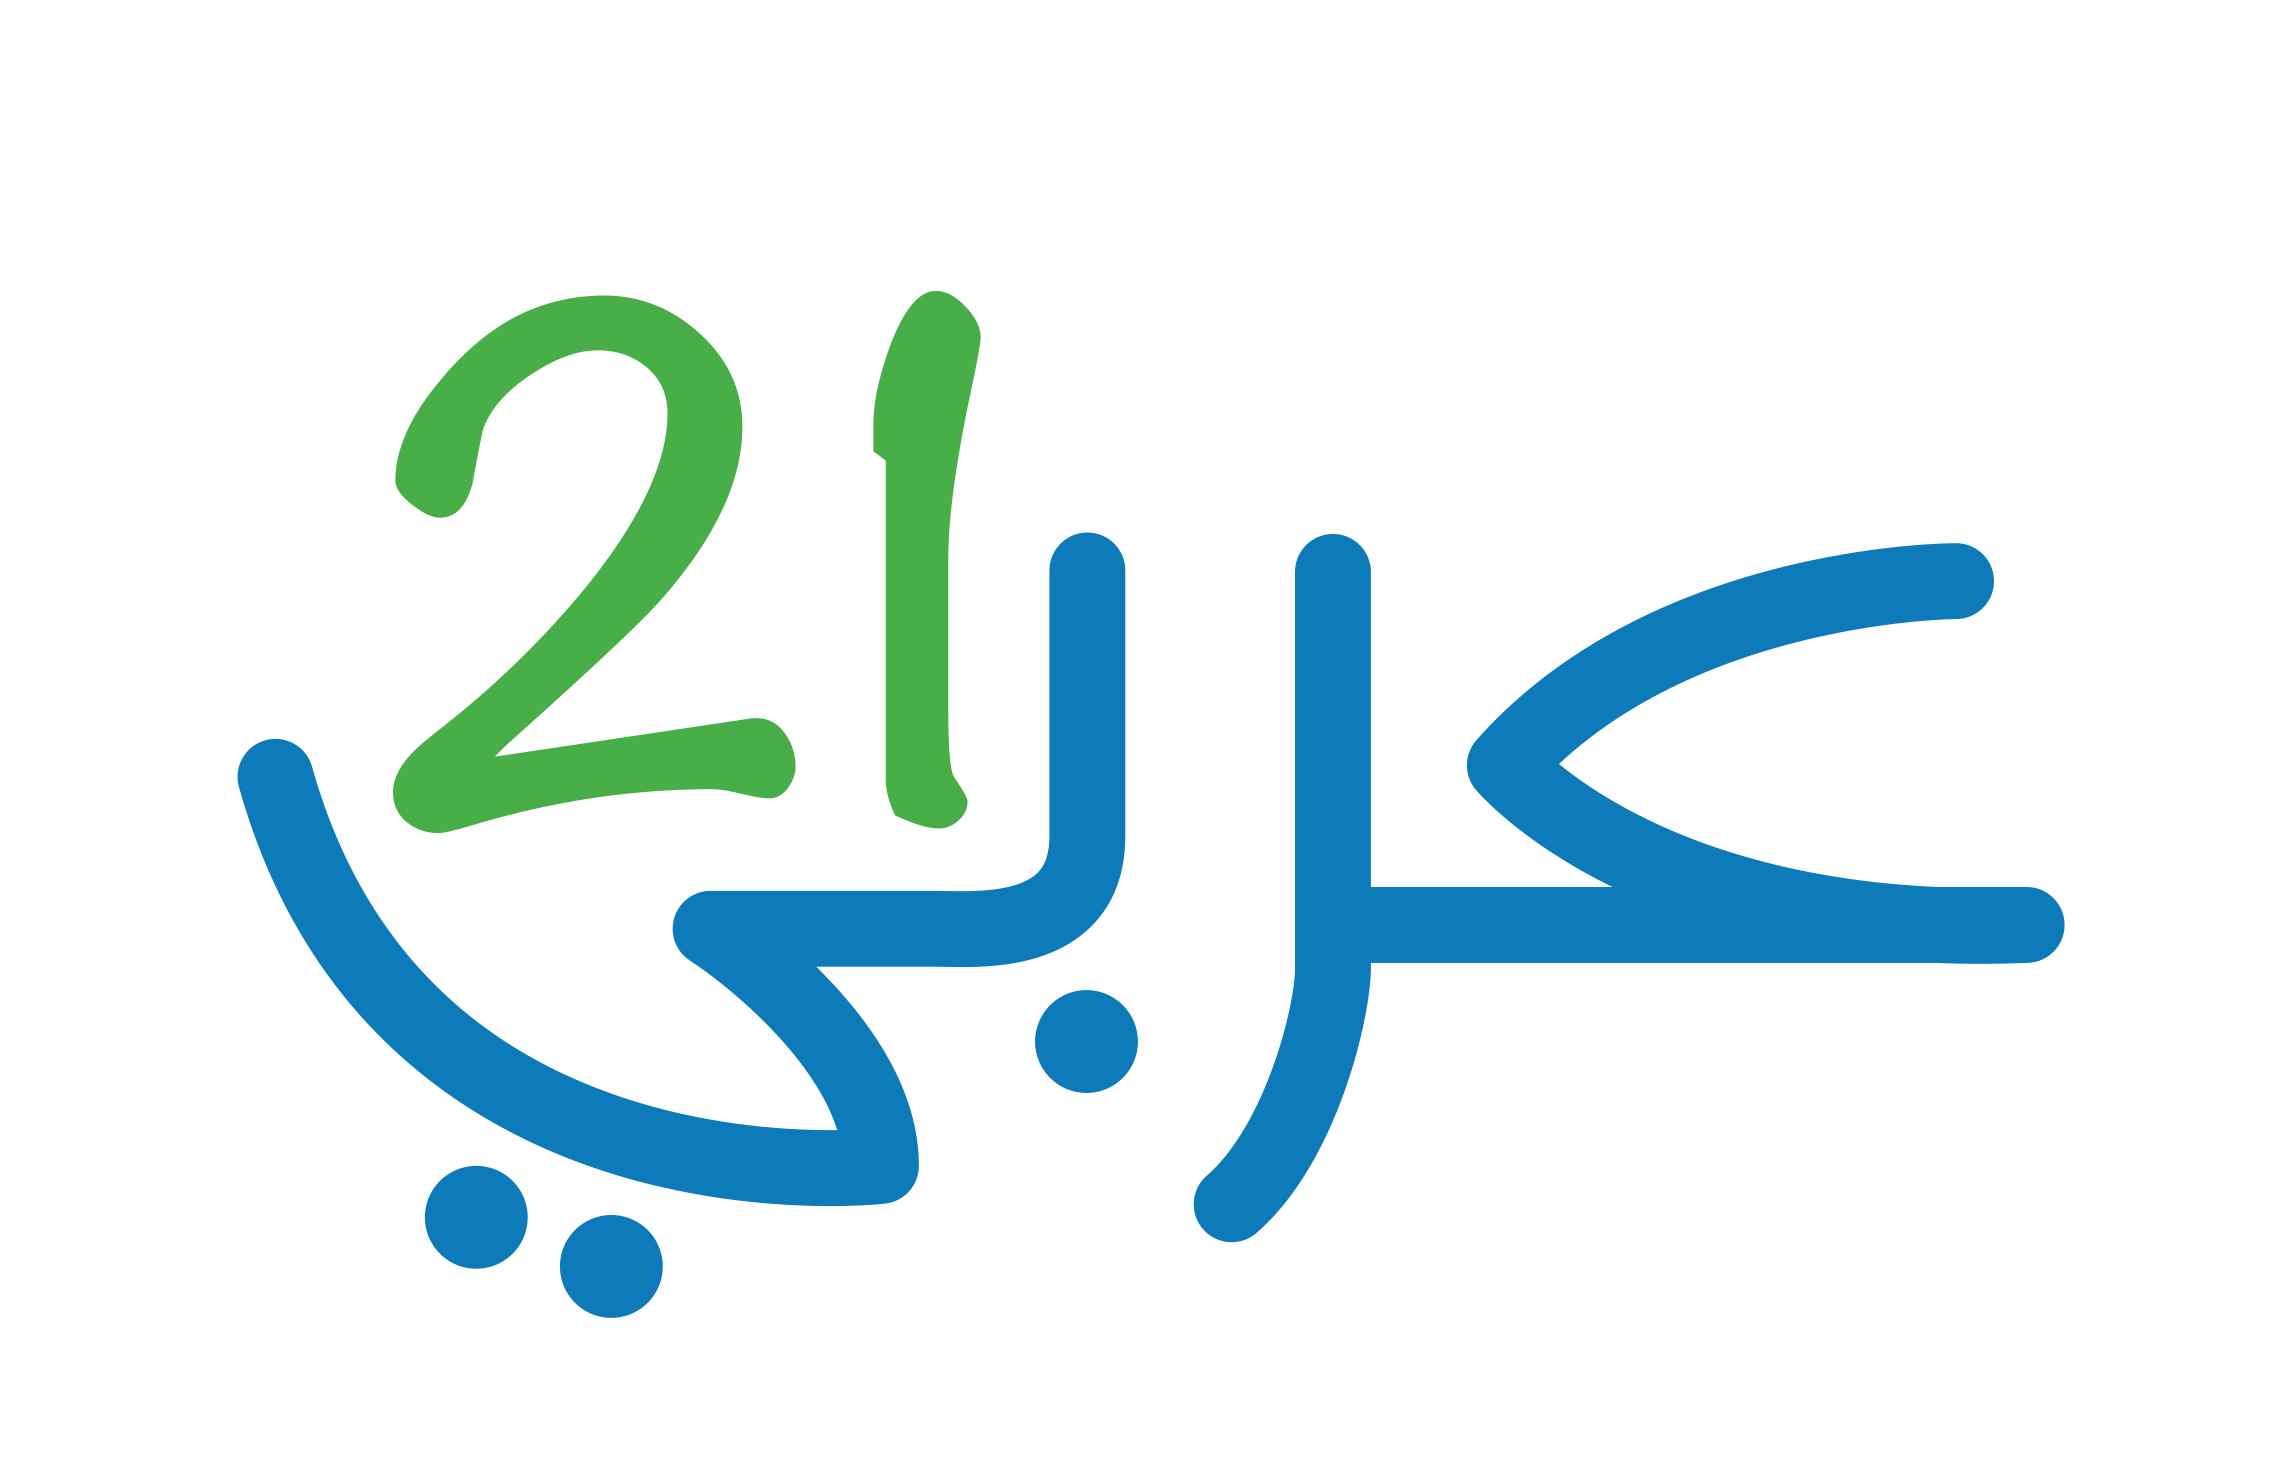 The Logo of Arai 21 Project